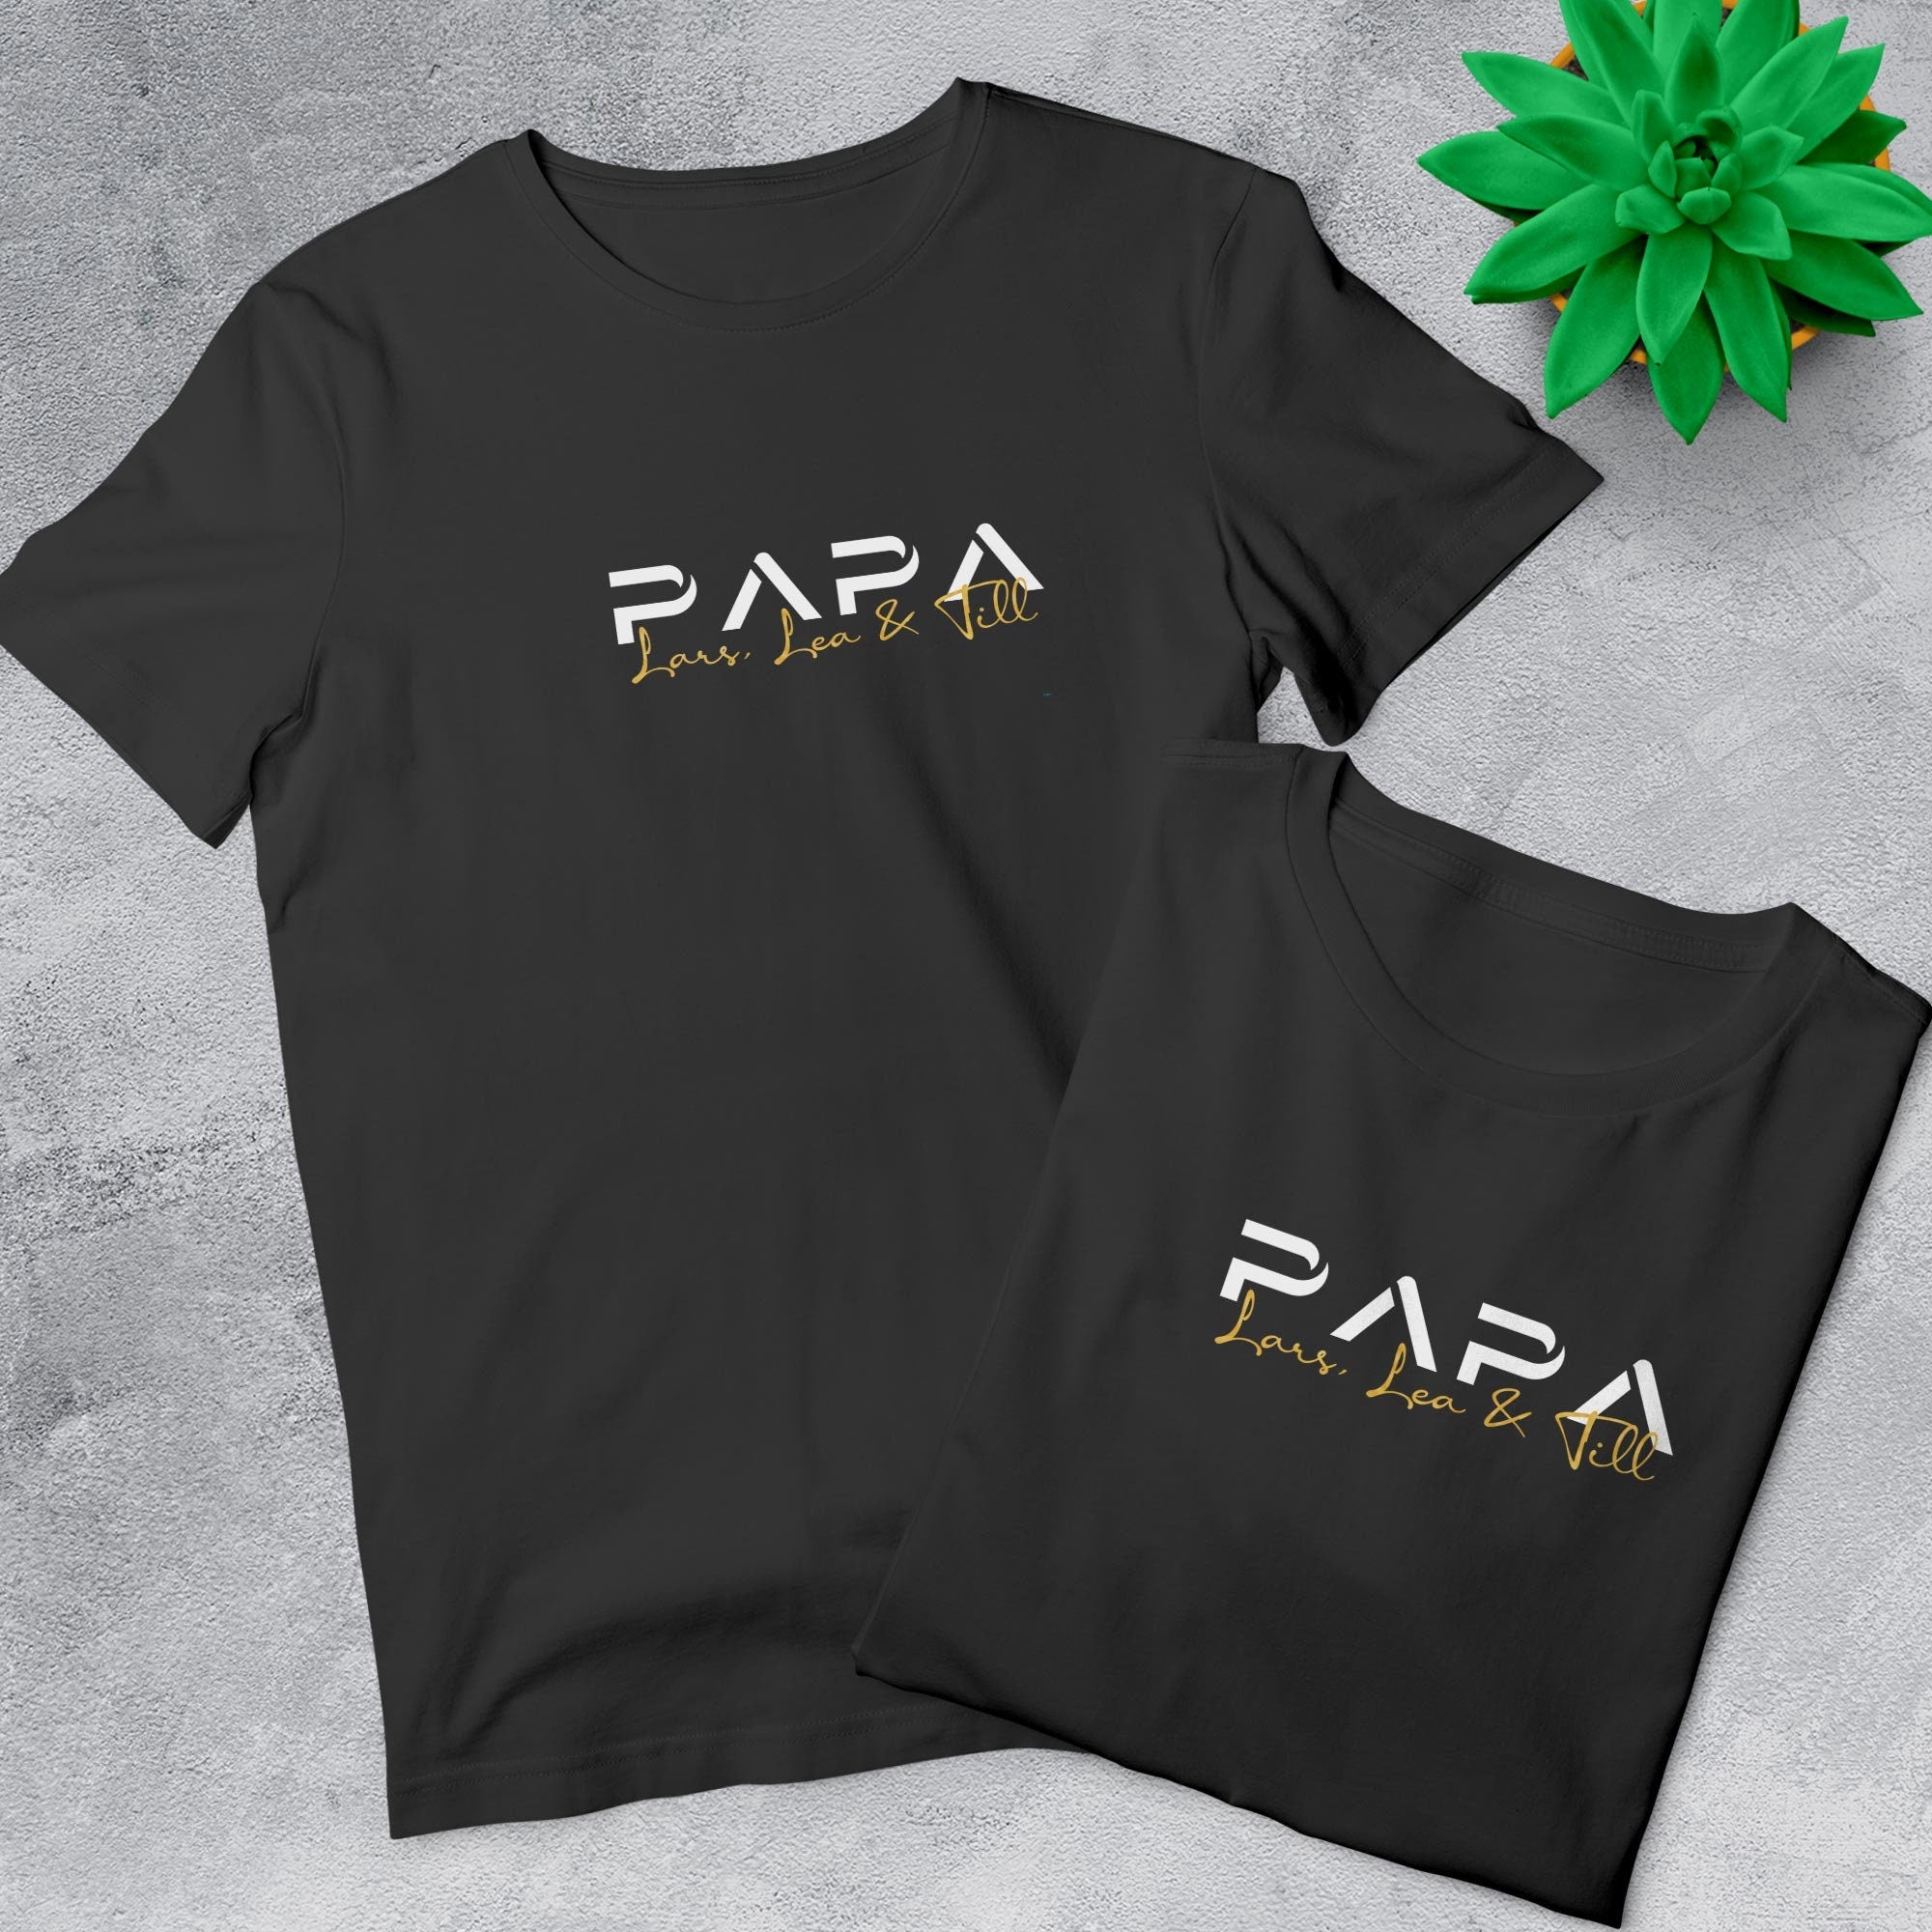 Papa I T-Shirt schwarz, personalisiert mit Namen